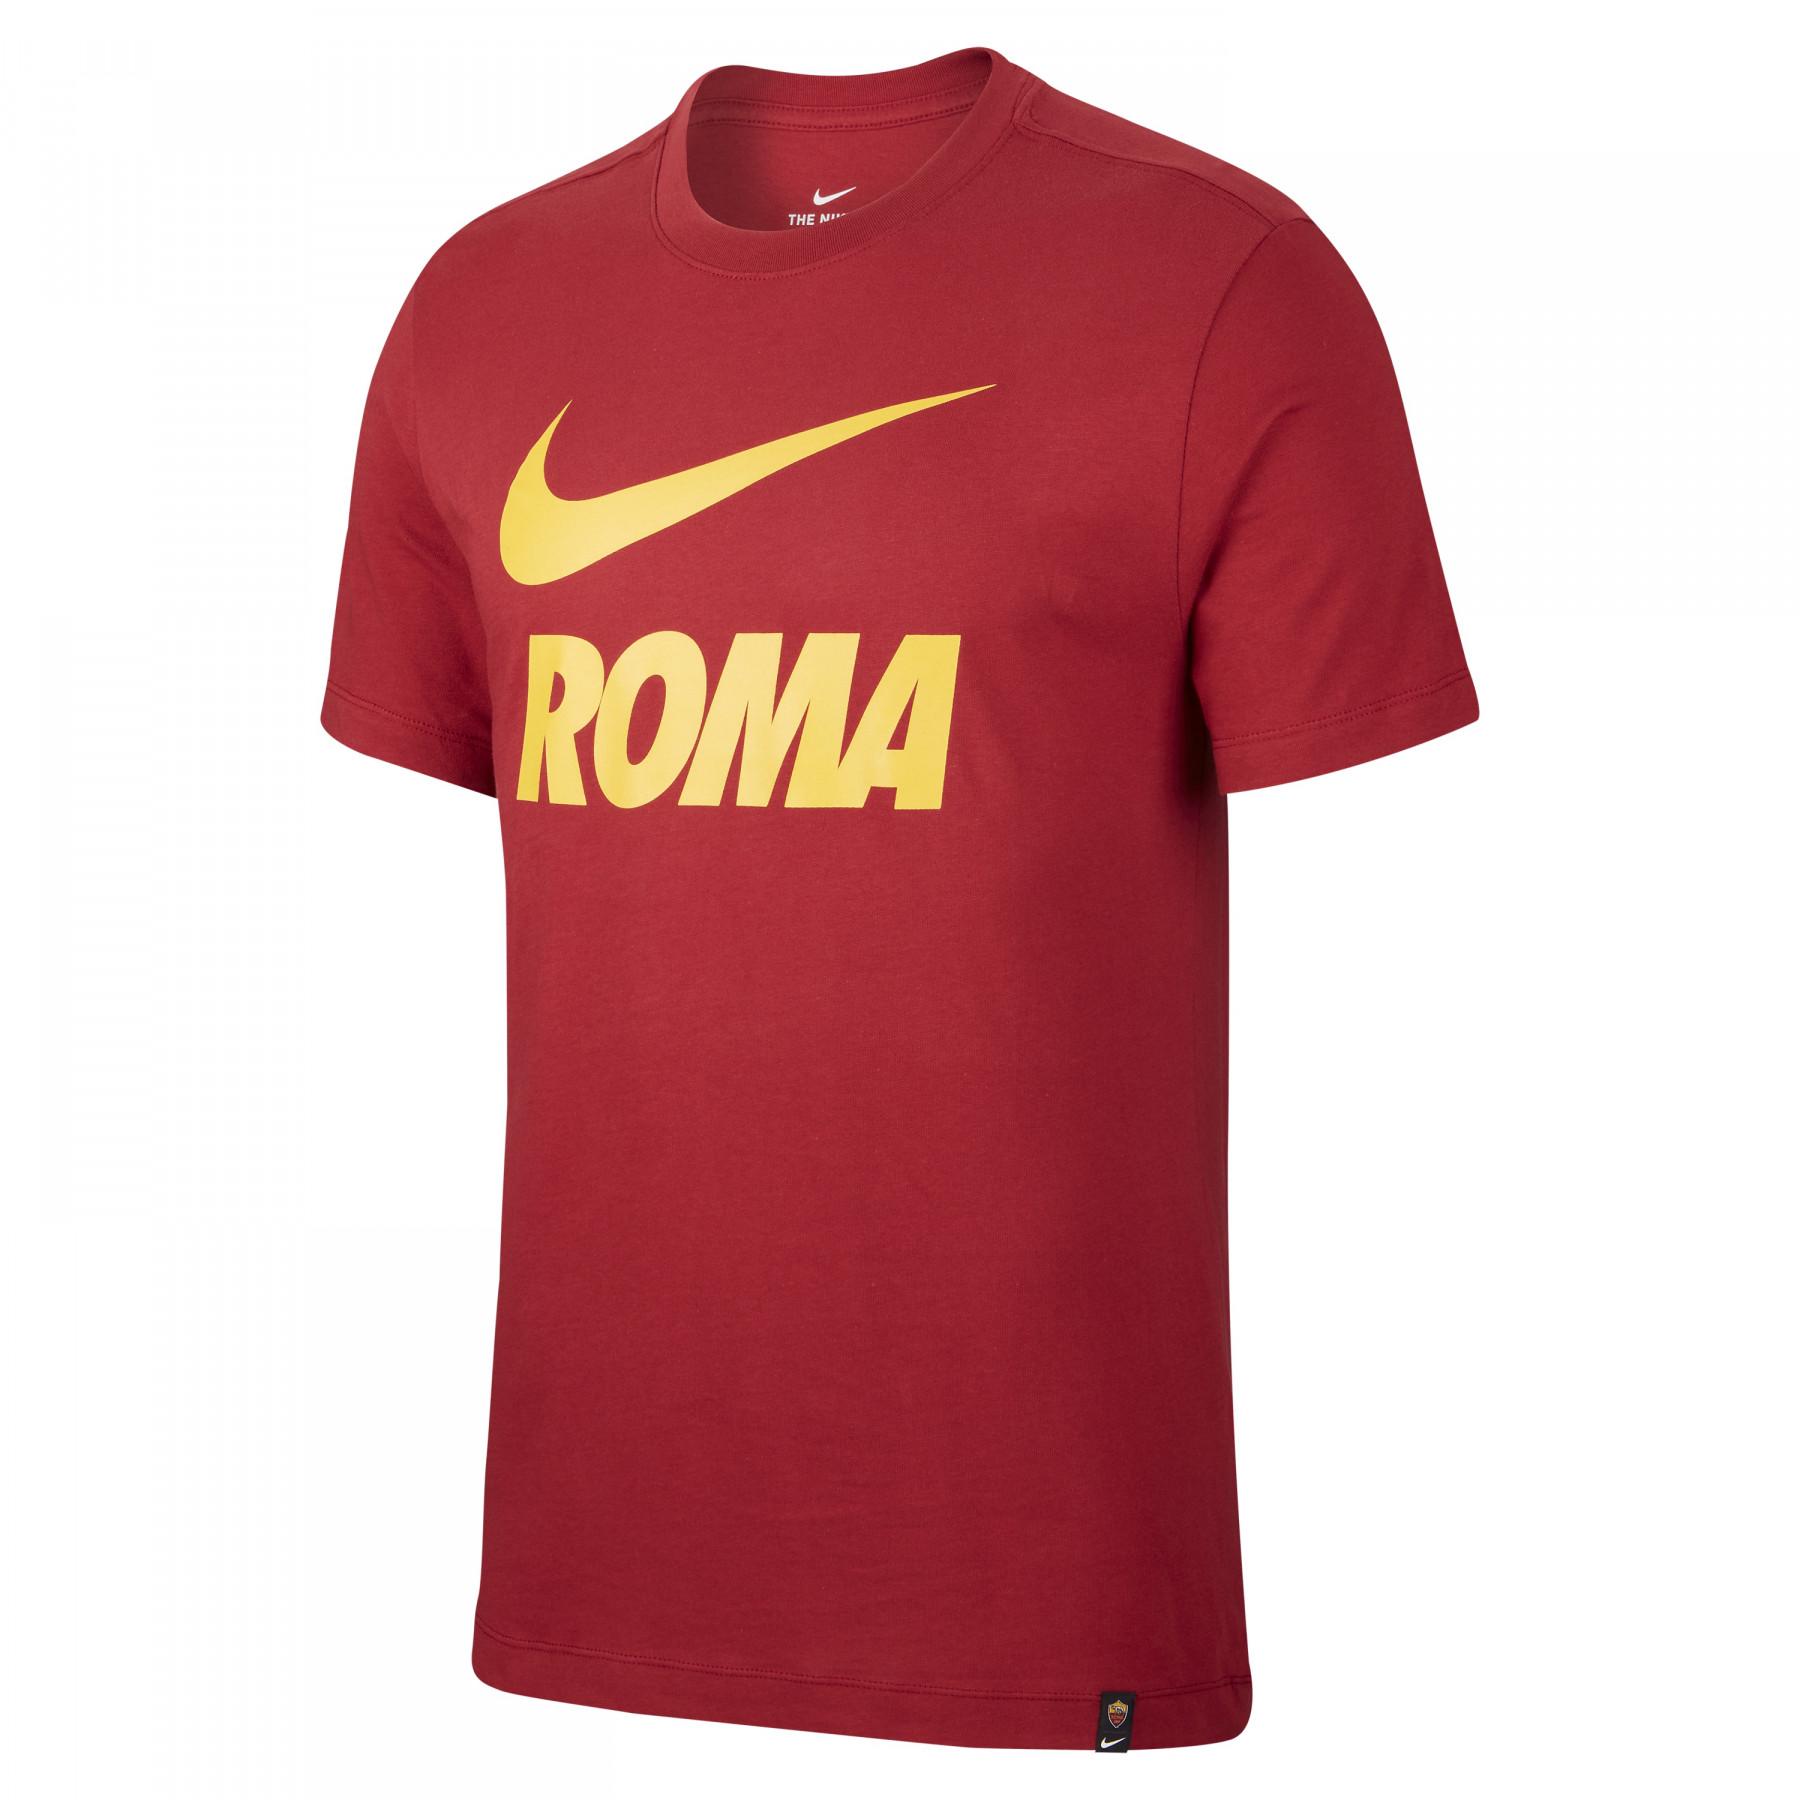 T-shirt AS Roma